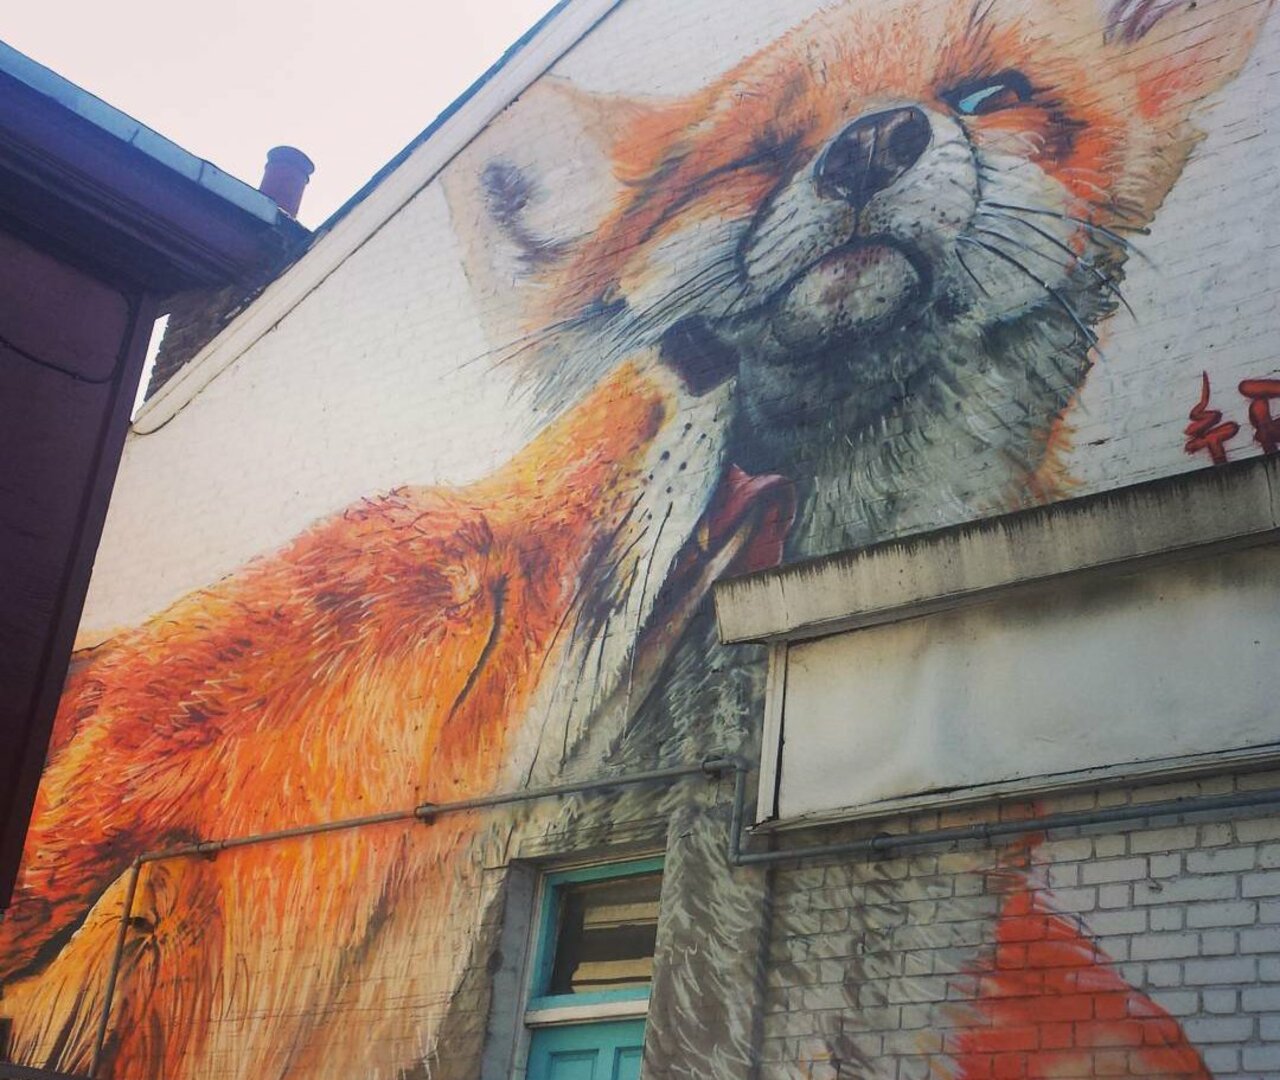 Saw some rather lovely #foxy #graffiti today!  #Walthamstow #London #fox #street #art https://t.co/uXvOKSyMpR